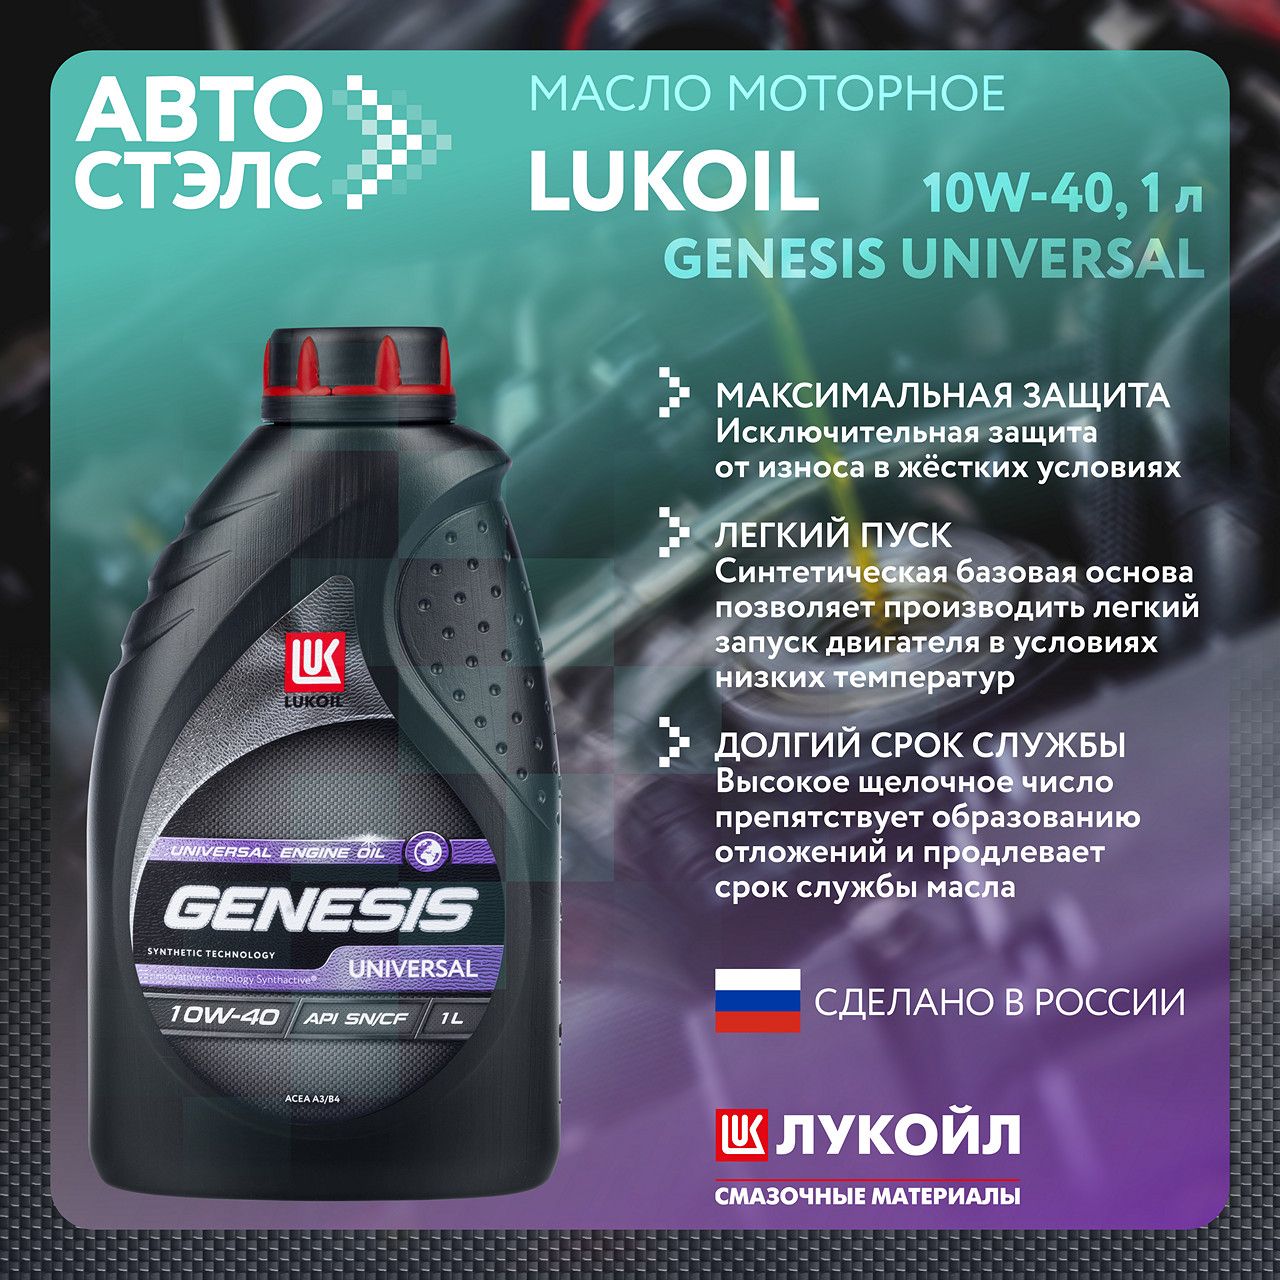 Lukoil Genesis Universal 10w-40. Лукойл Адвансед 10w 40. 10 На 40 Лукойл Advanced. Лукойл генезис 10w40